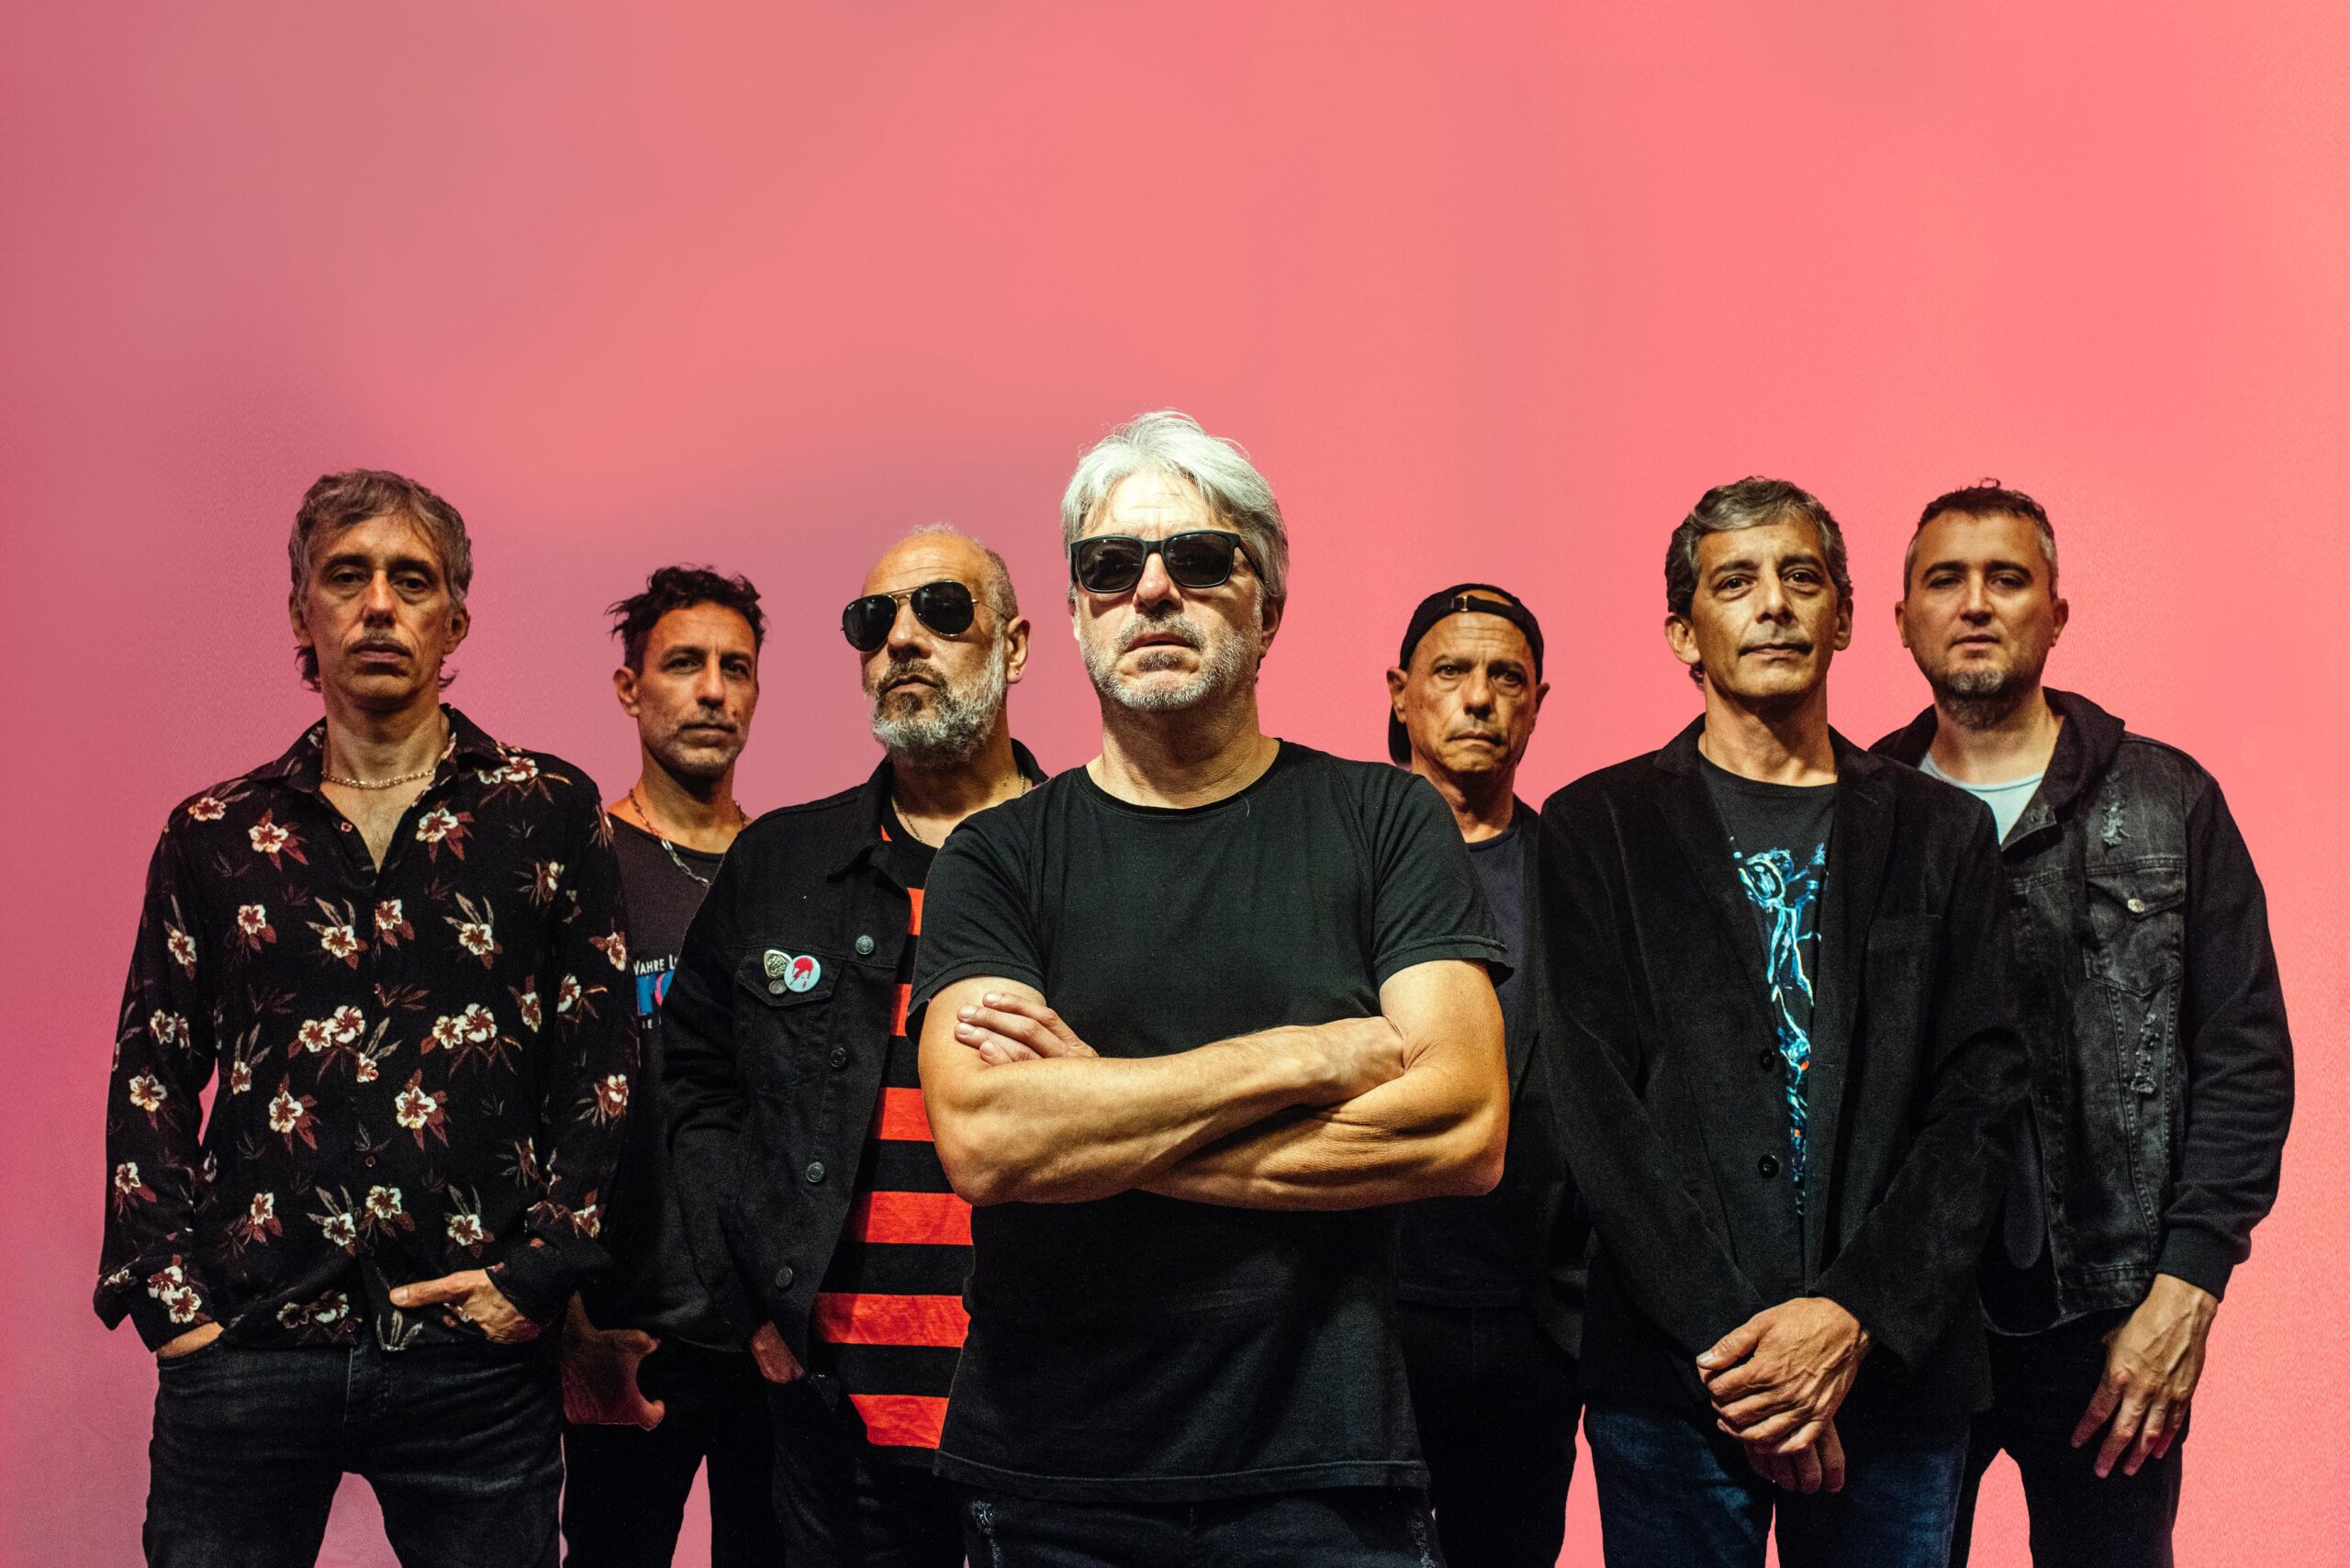 La banda argentina de rock alternativo Estelares regresa a México